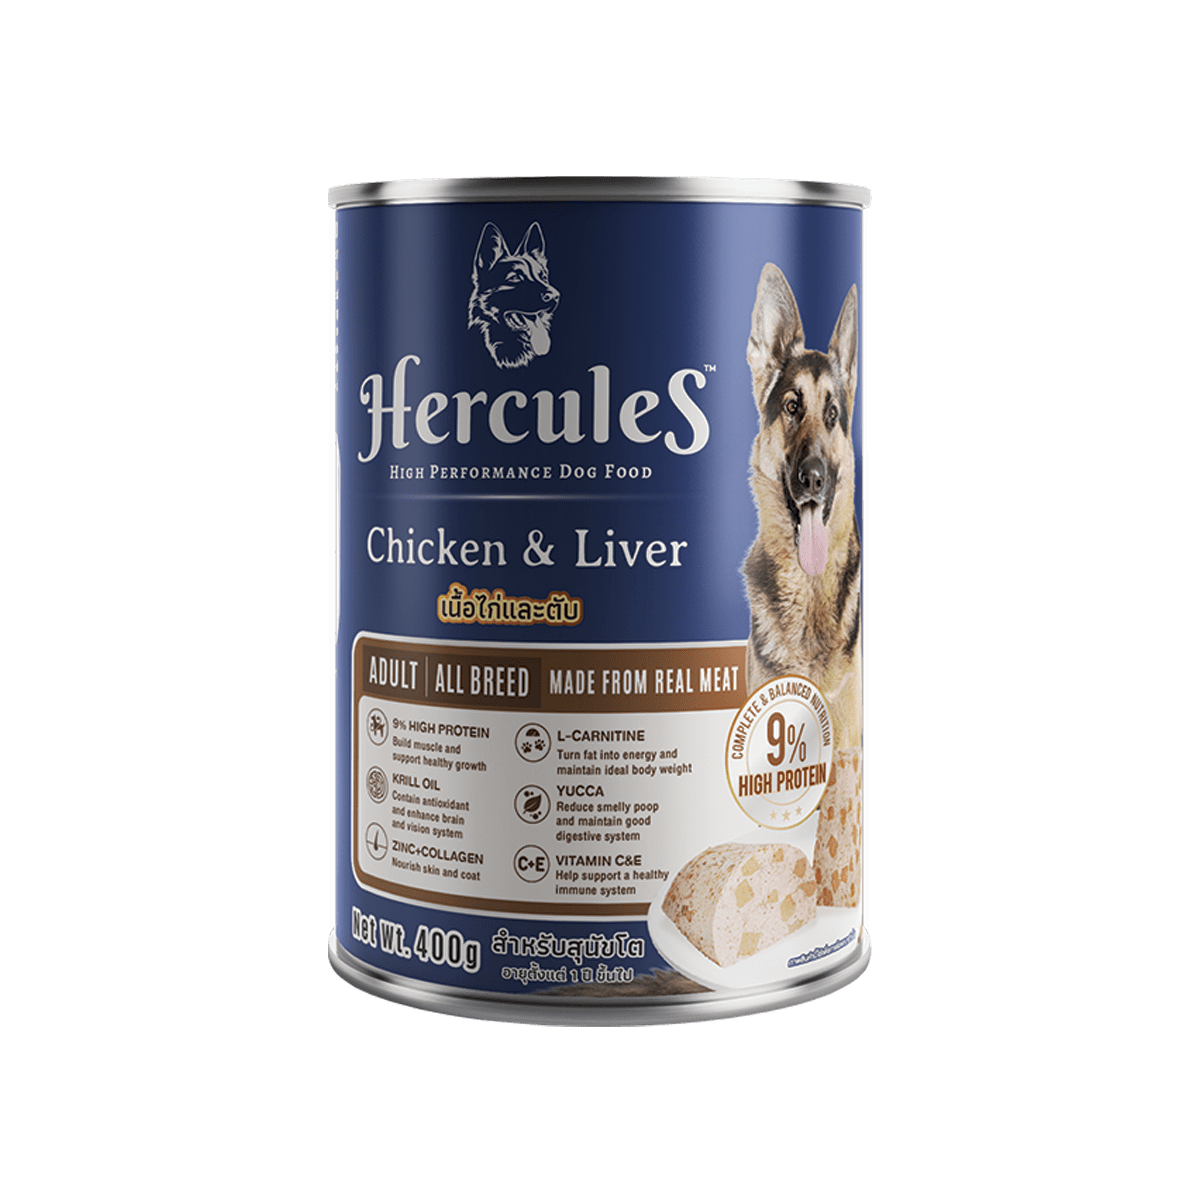 Hercules kyllingrase